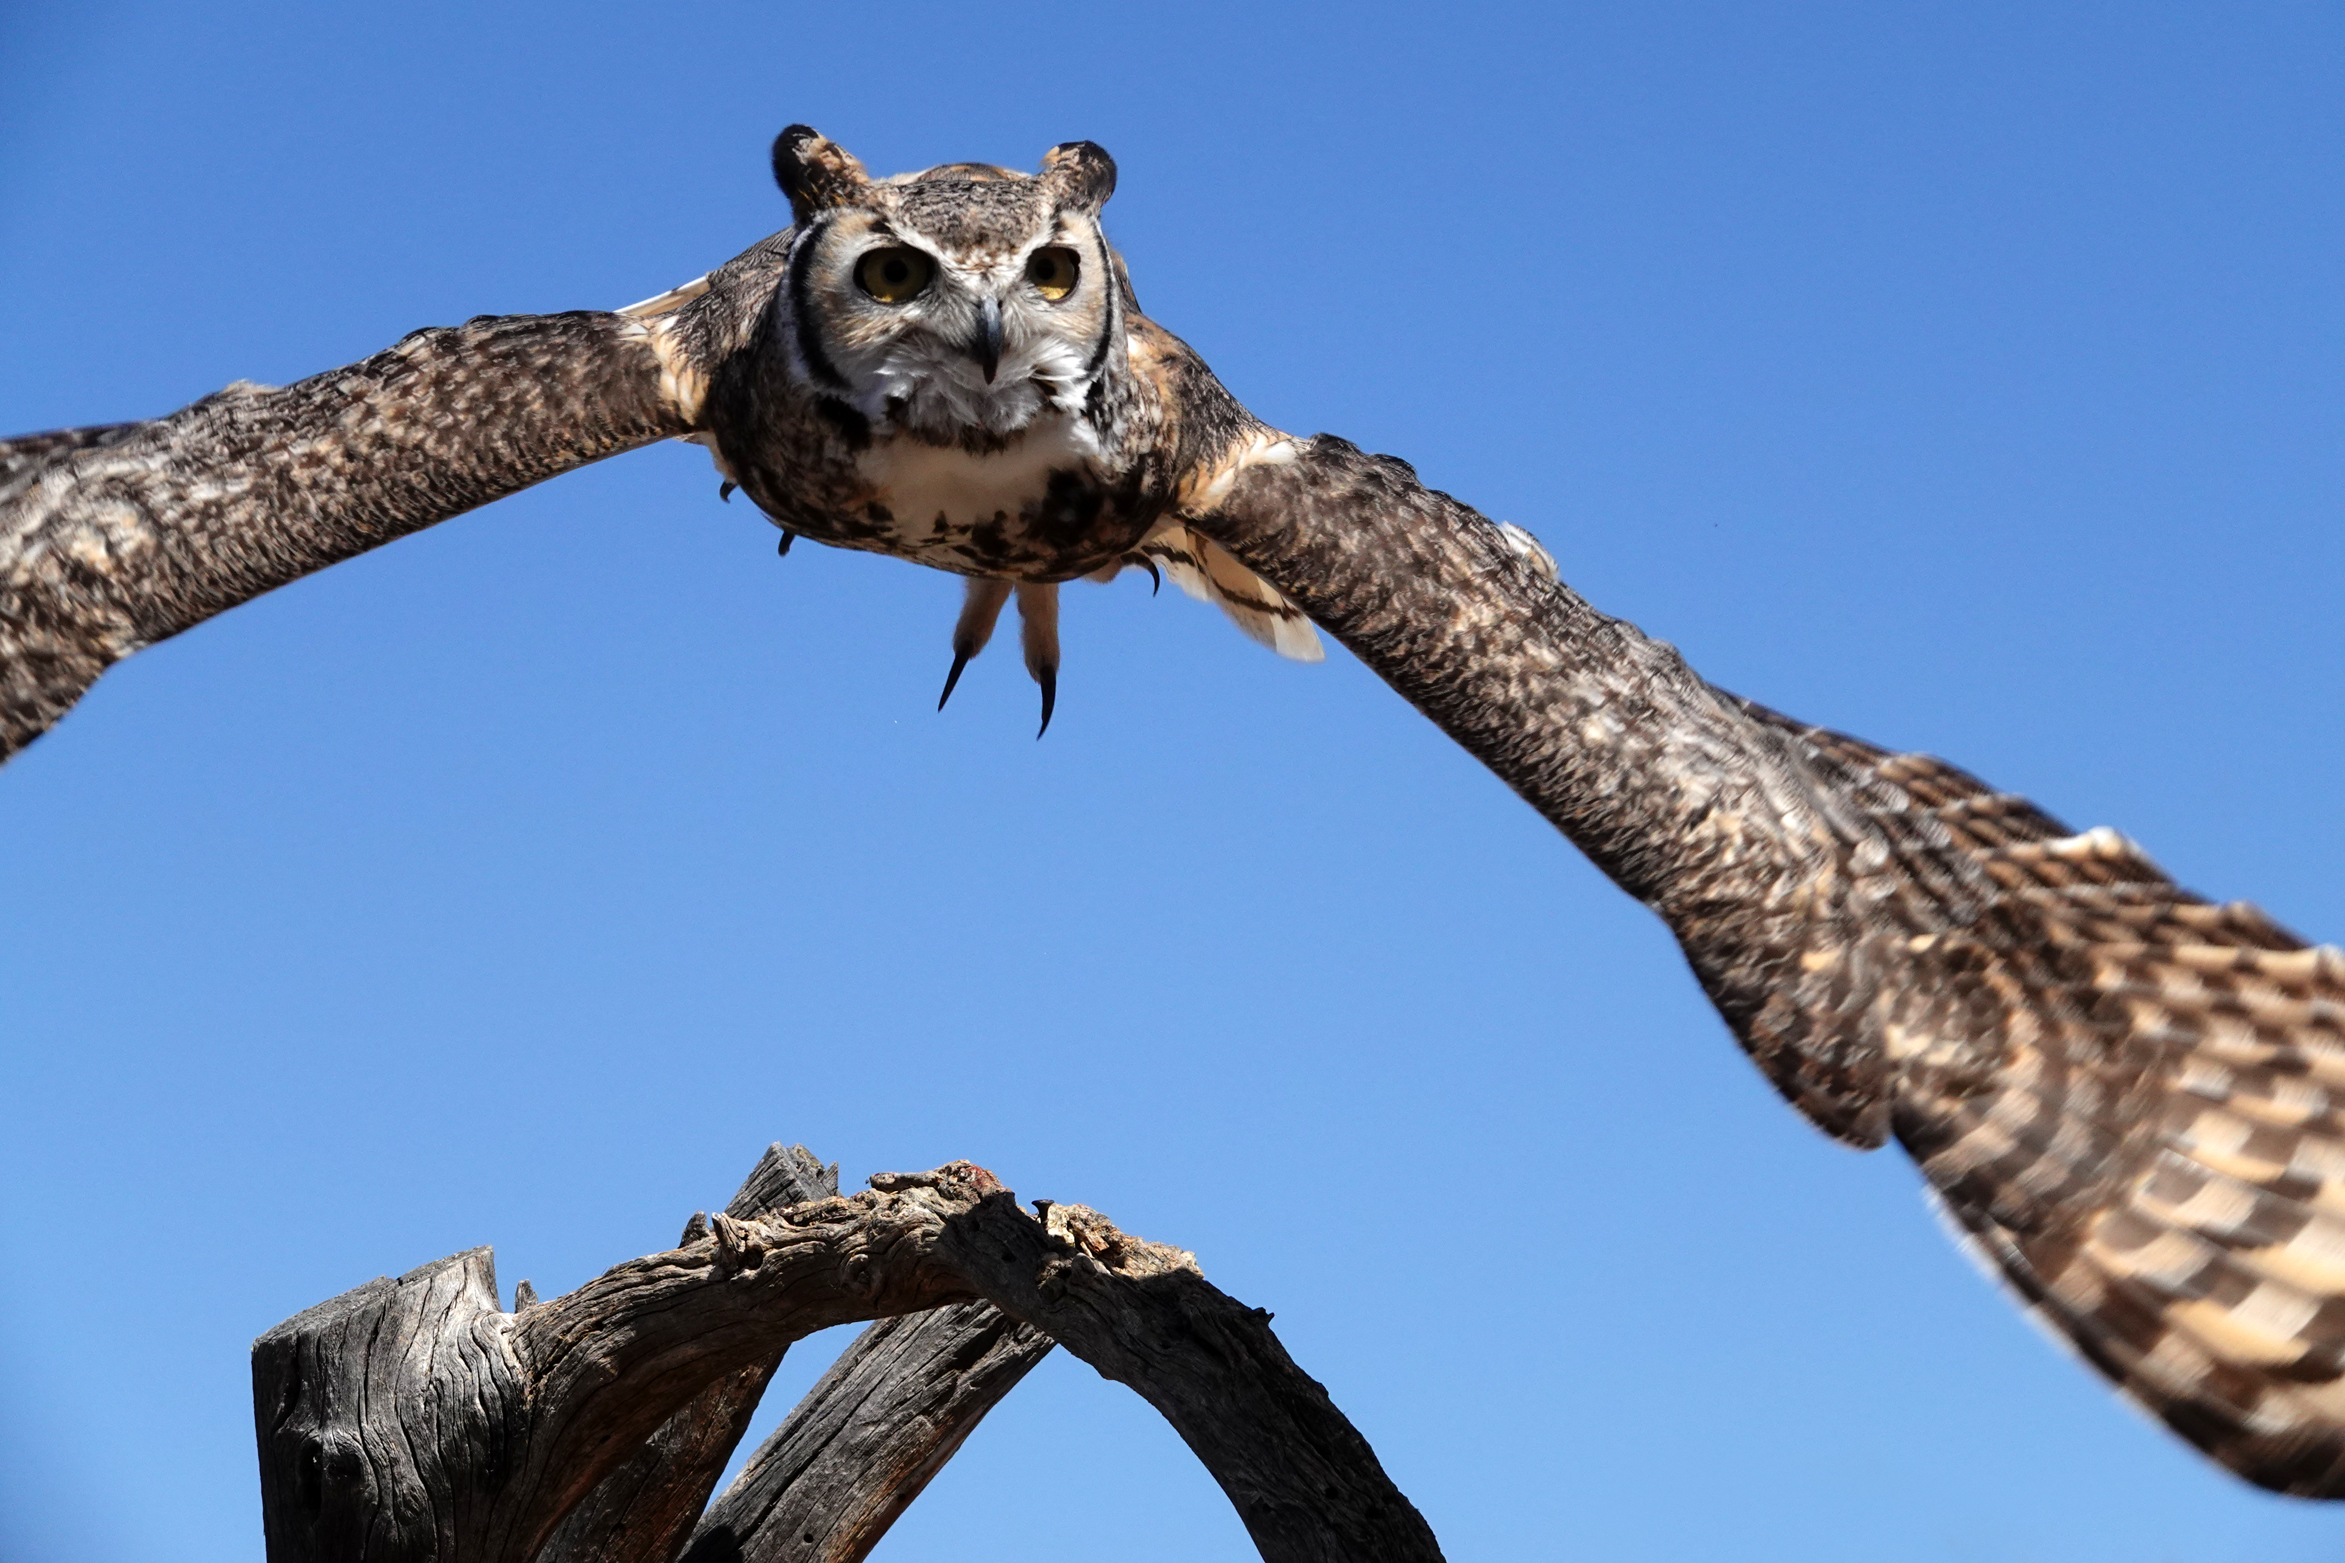 Great horned owl  -  Raptor Free Flight Demonstration, Arizona-Sonora Desert Museum, Arizona